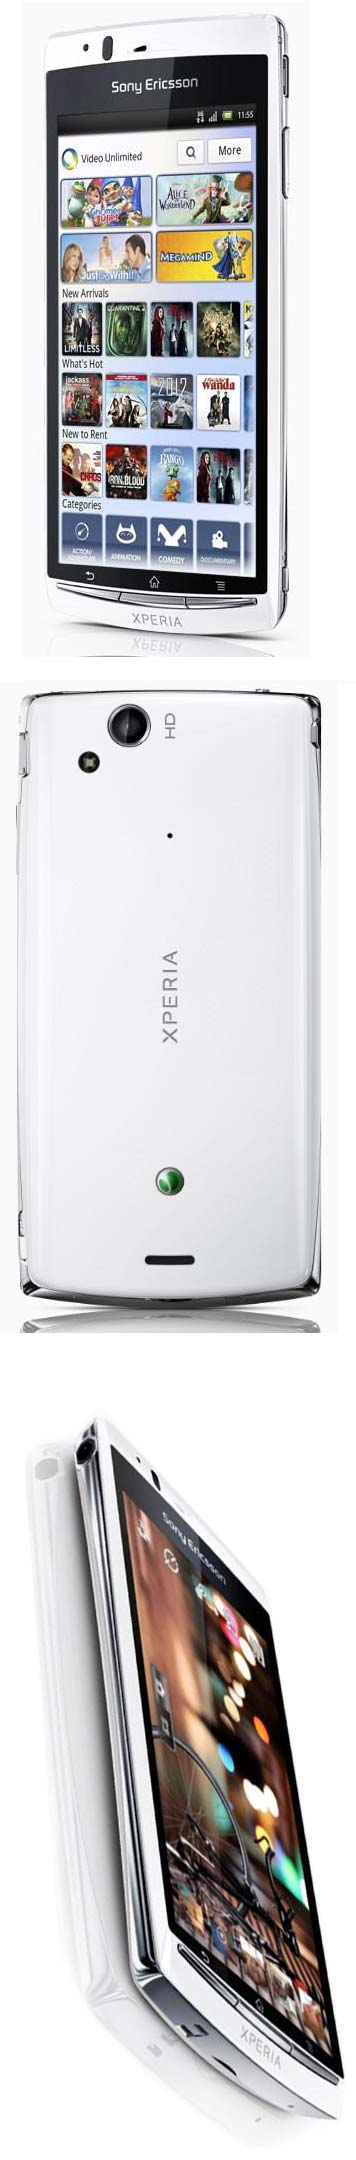 Новинка от Sony Ericsson - смартфон Xperia arc S